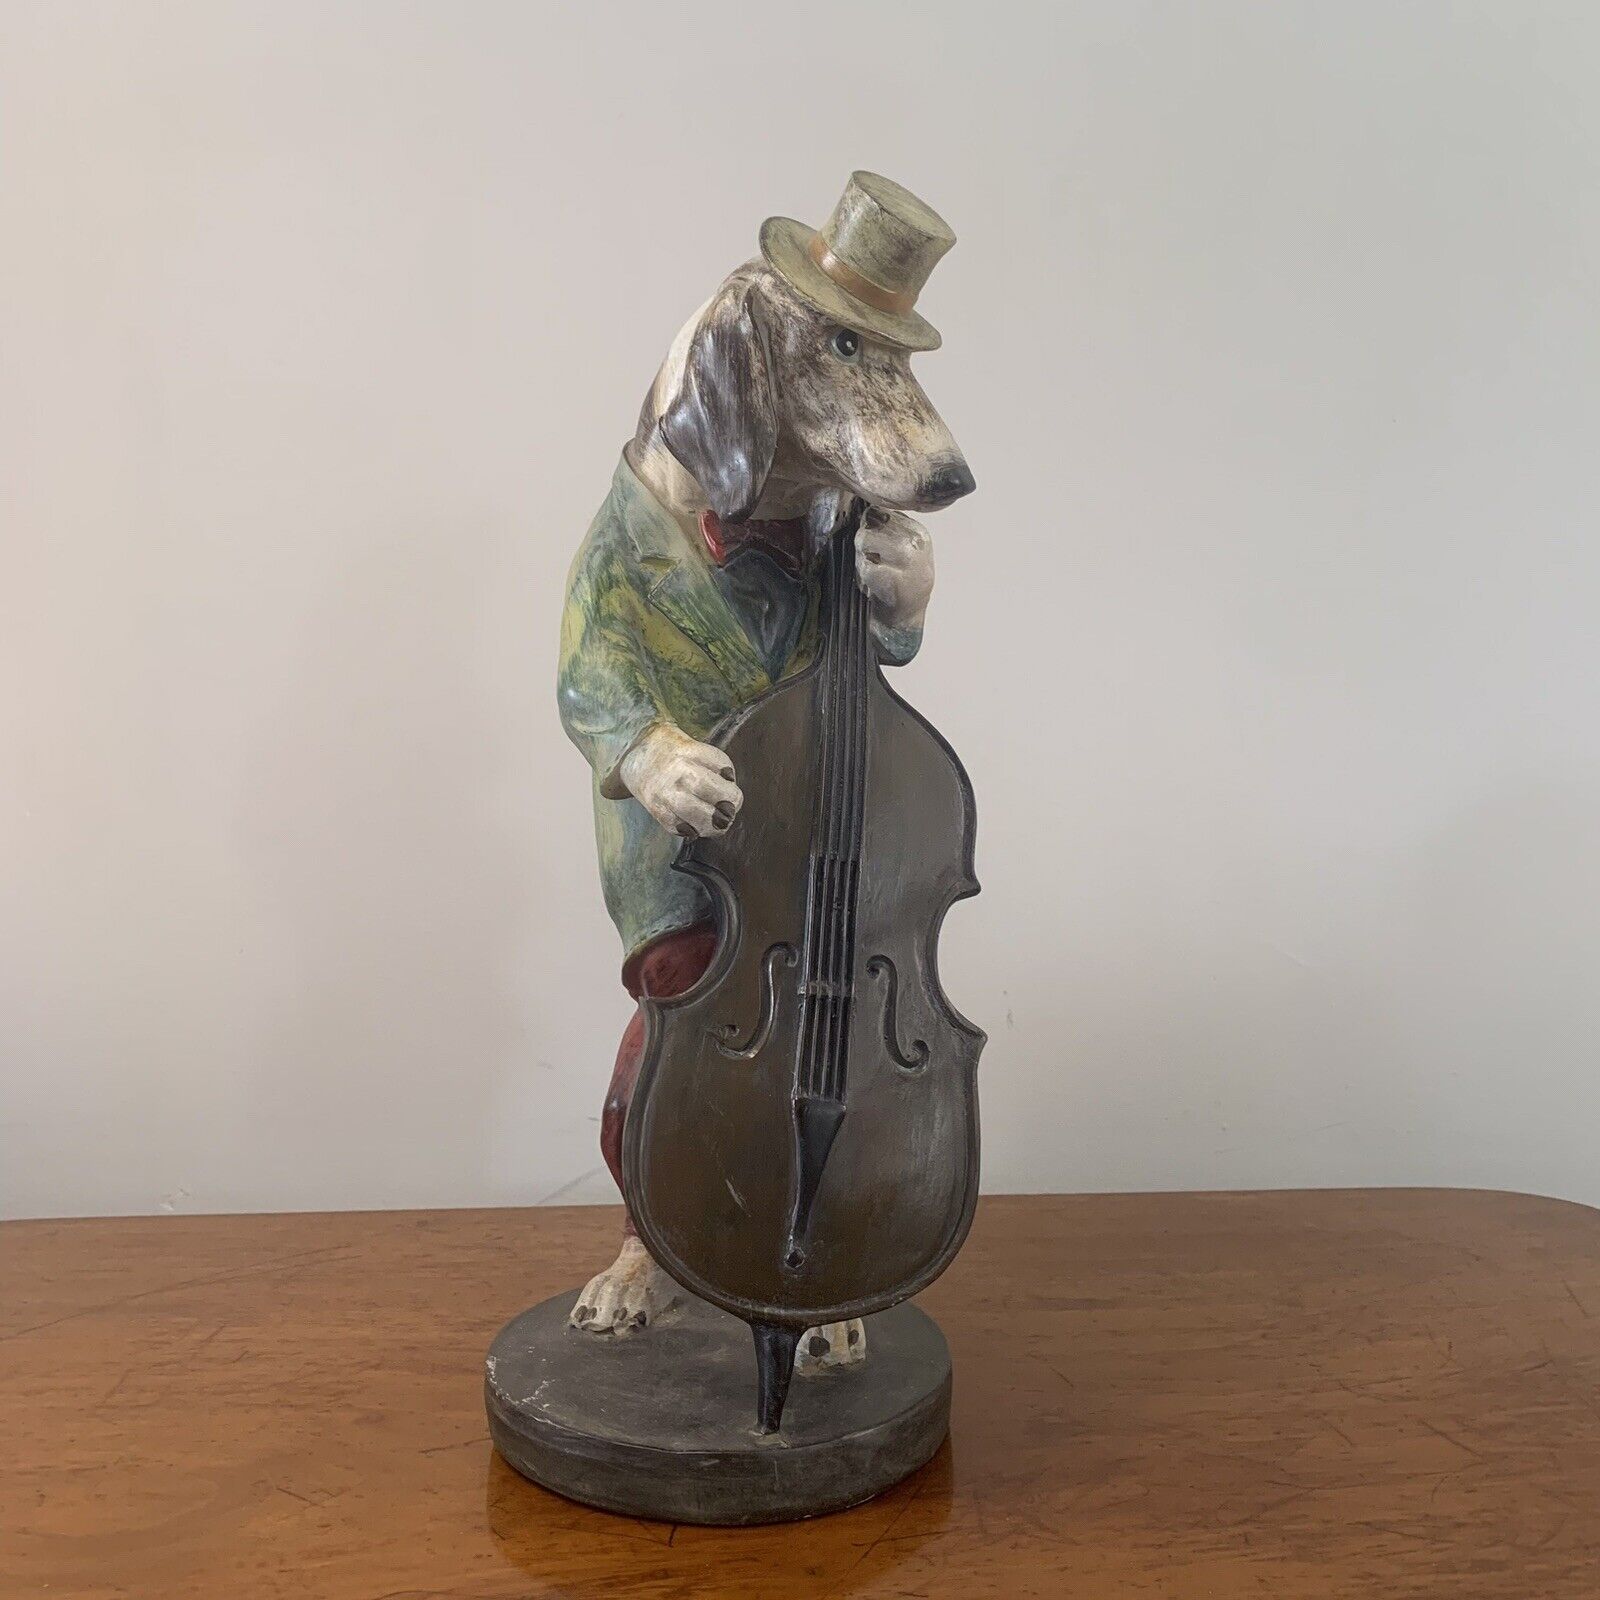 Bassett Hound Dog Playing Instrument Standing Dressed Large Resin Figure